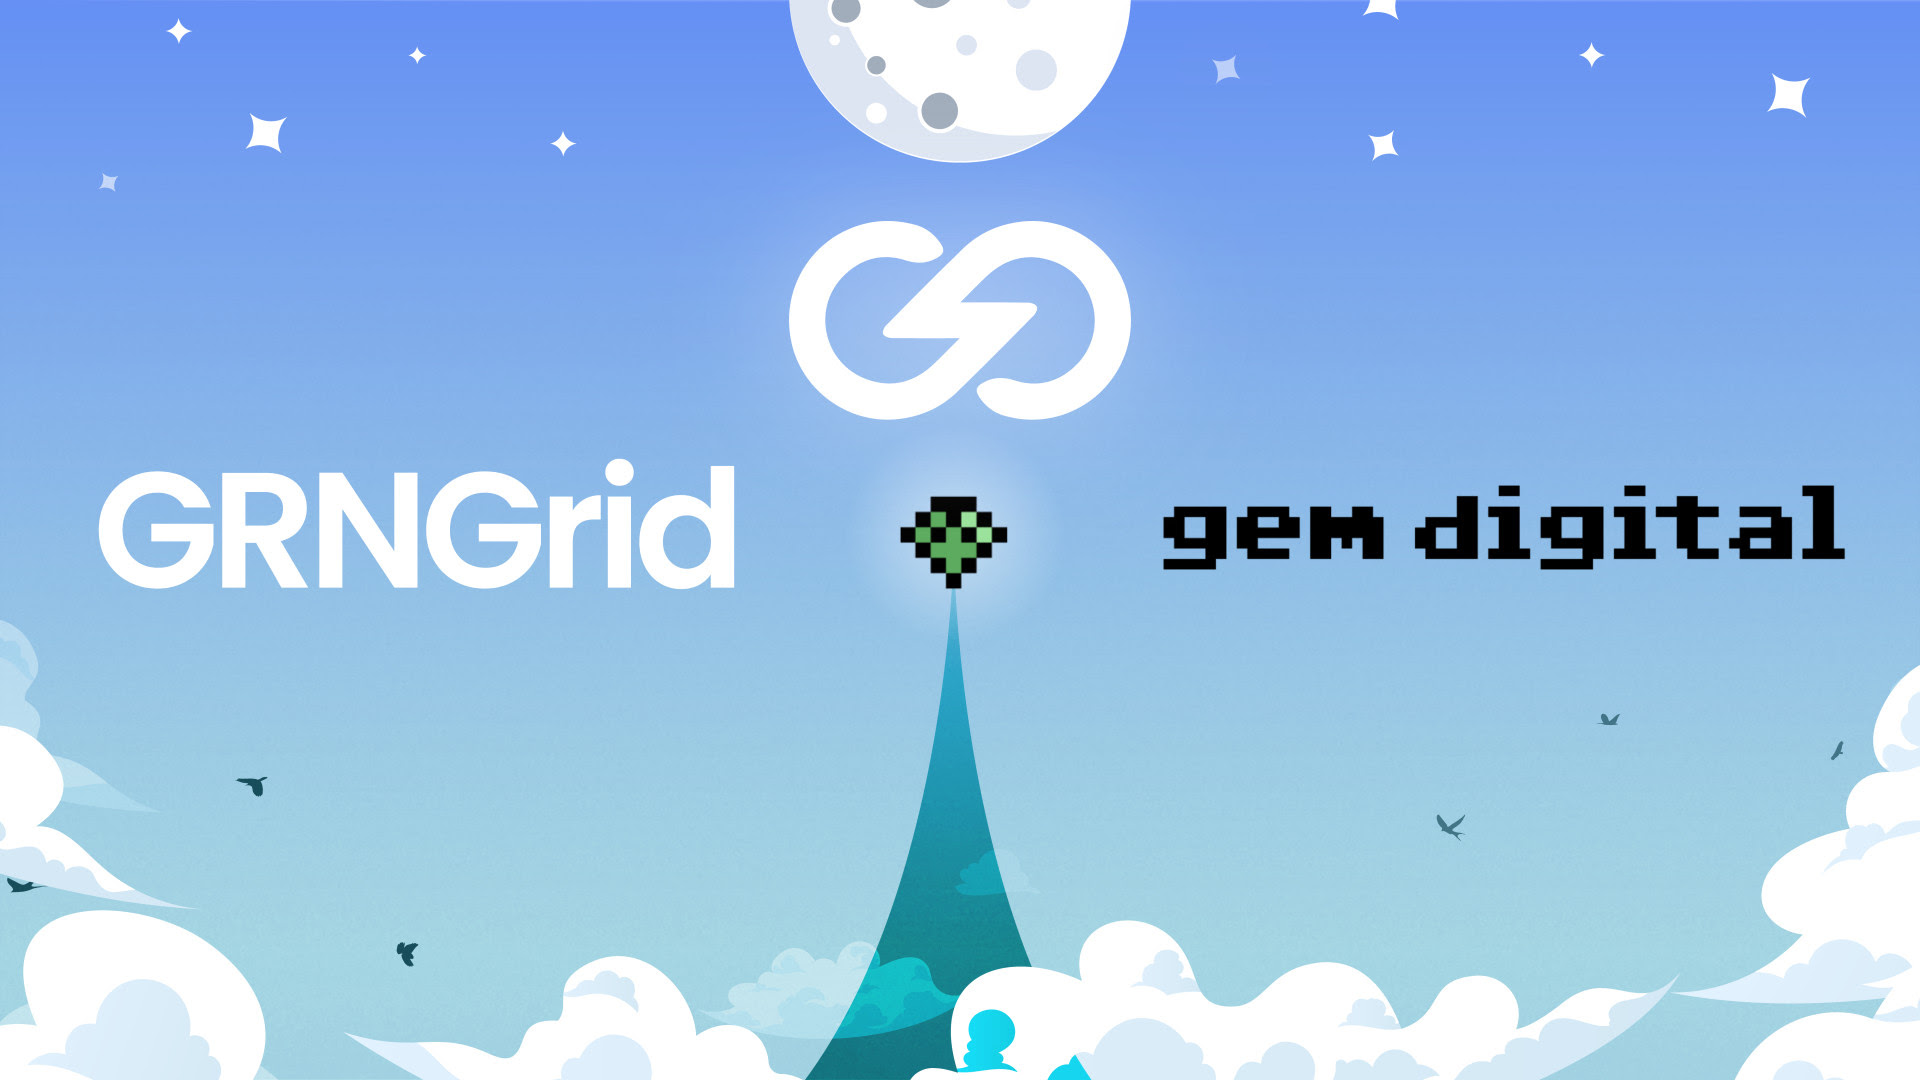  grngrid digital layer gem blockchain 50m invest 